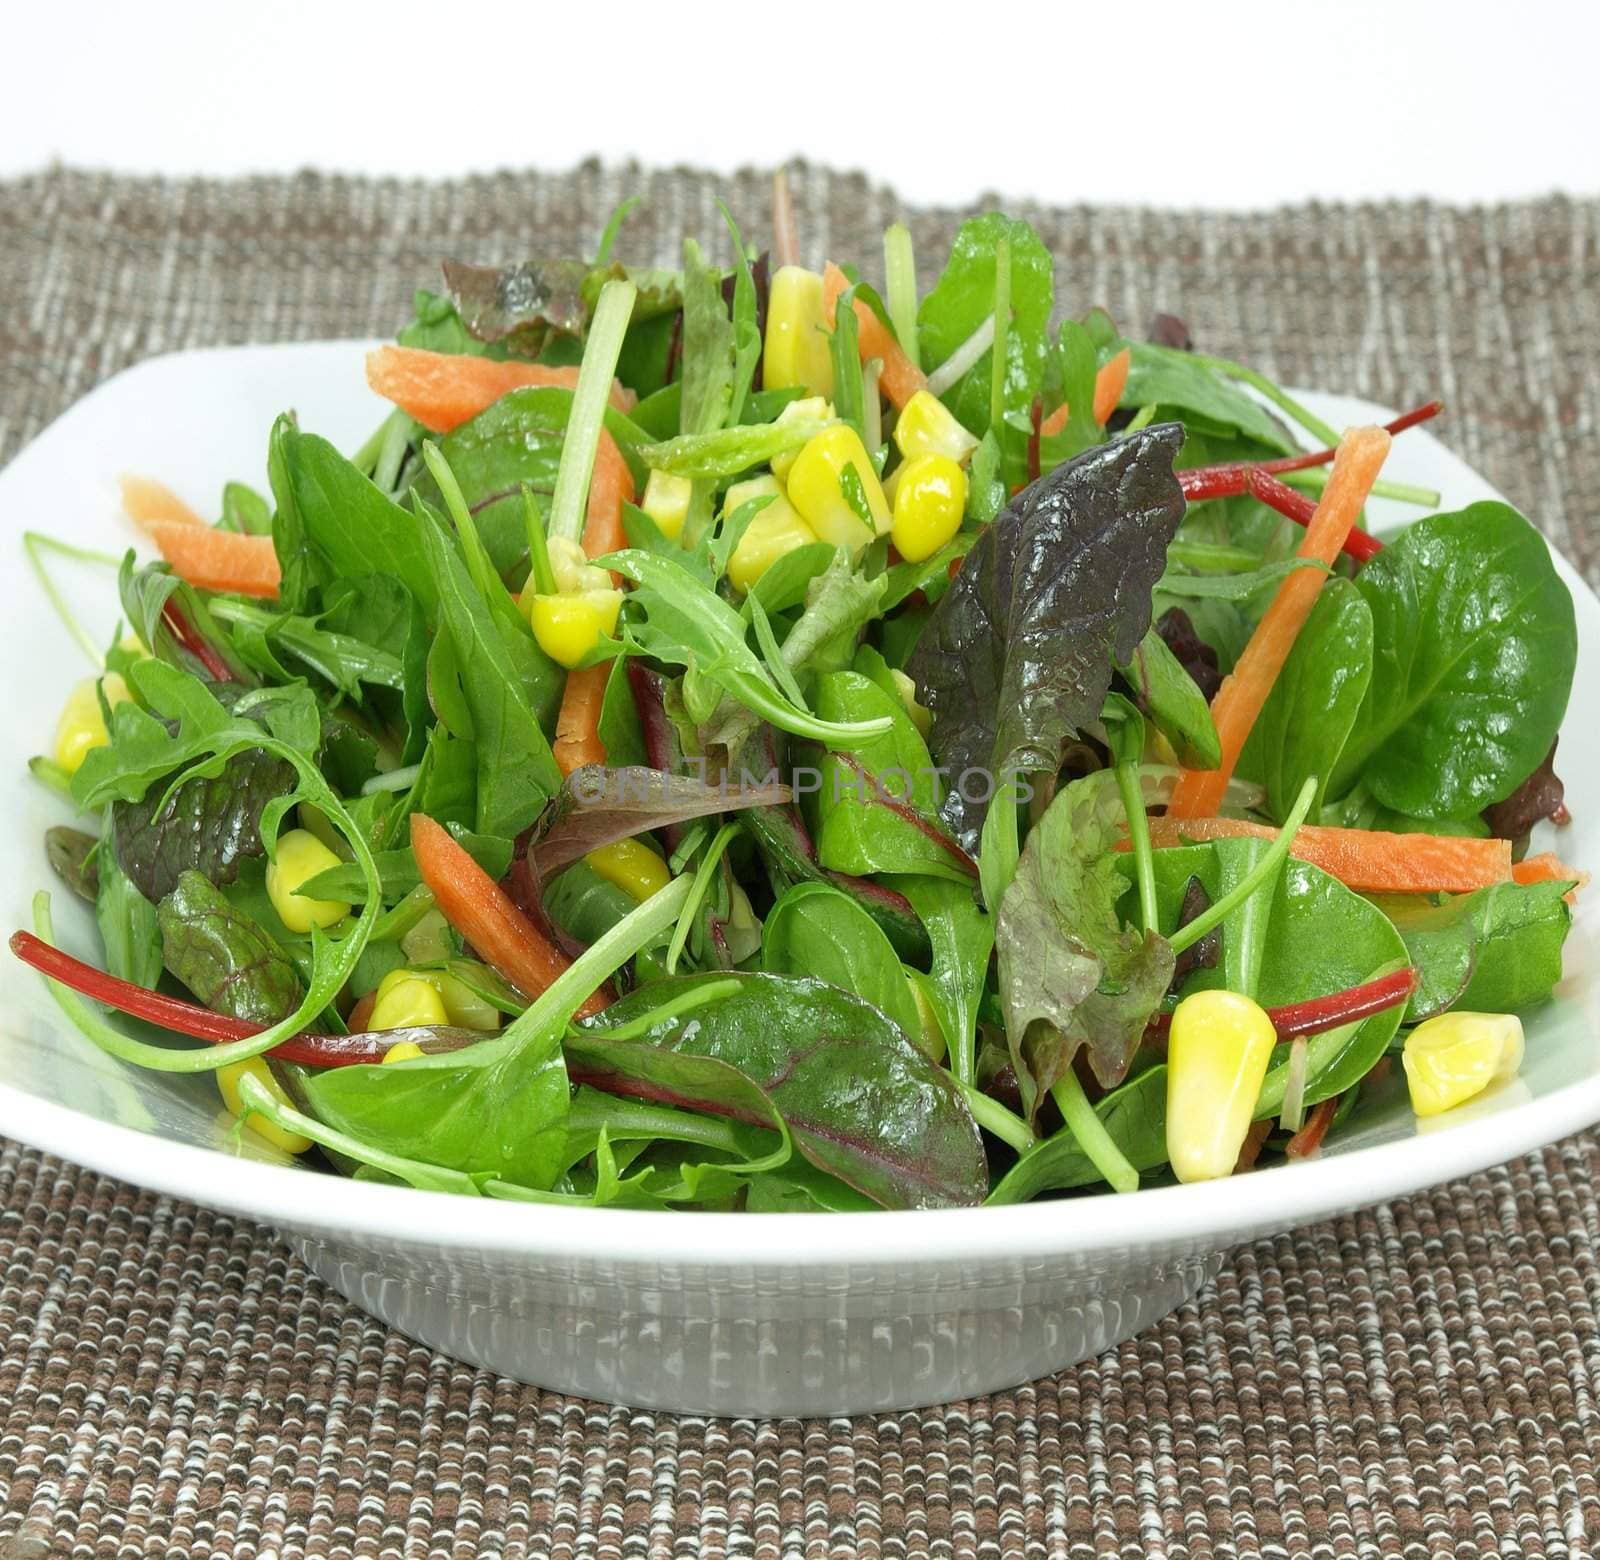 Baby greens - salad  by Ric510